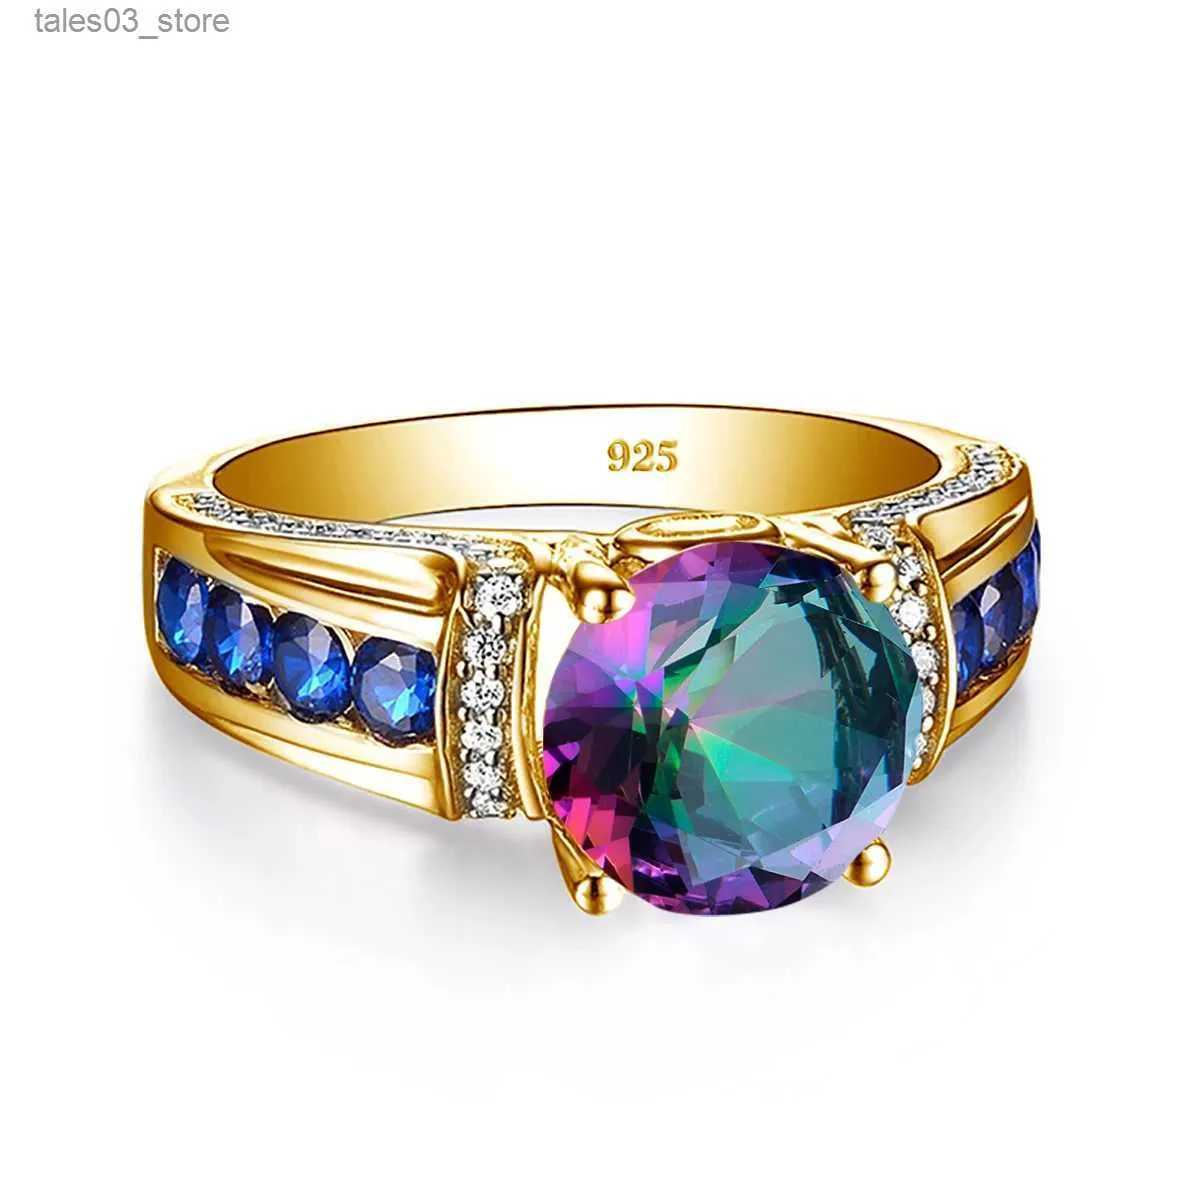 Designer Diamond Cocktail Ring